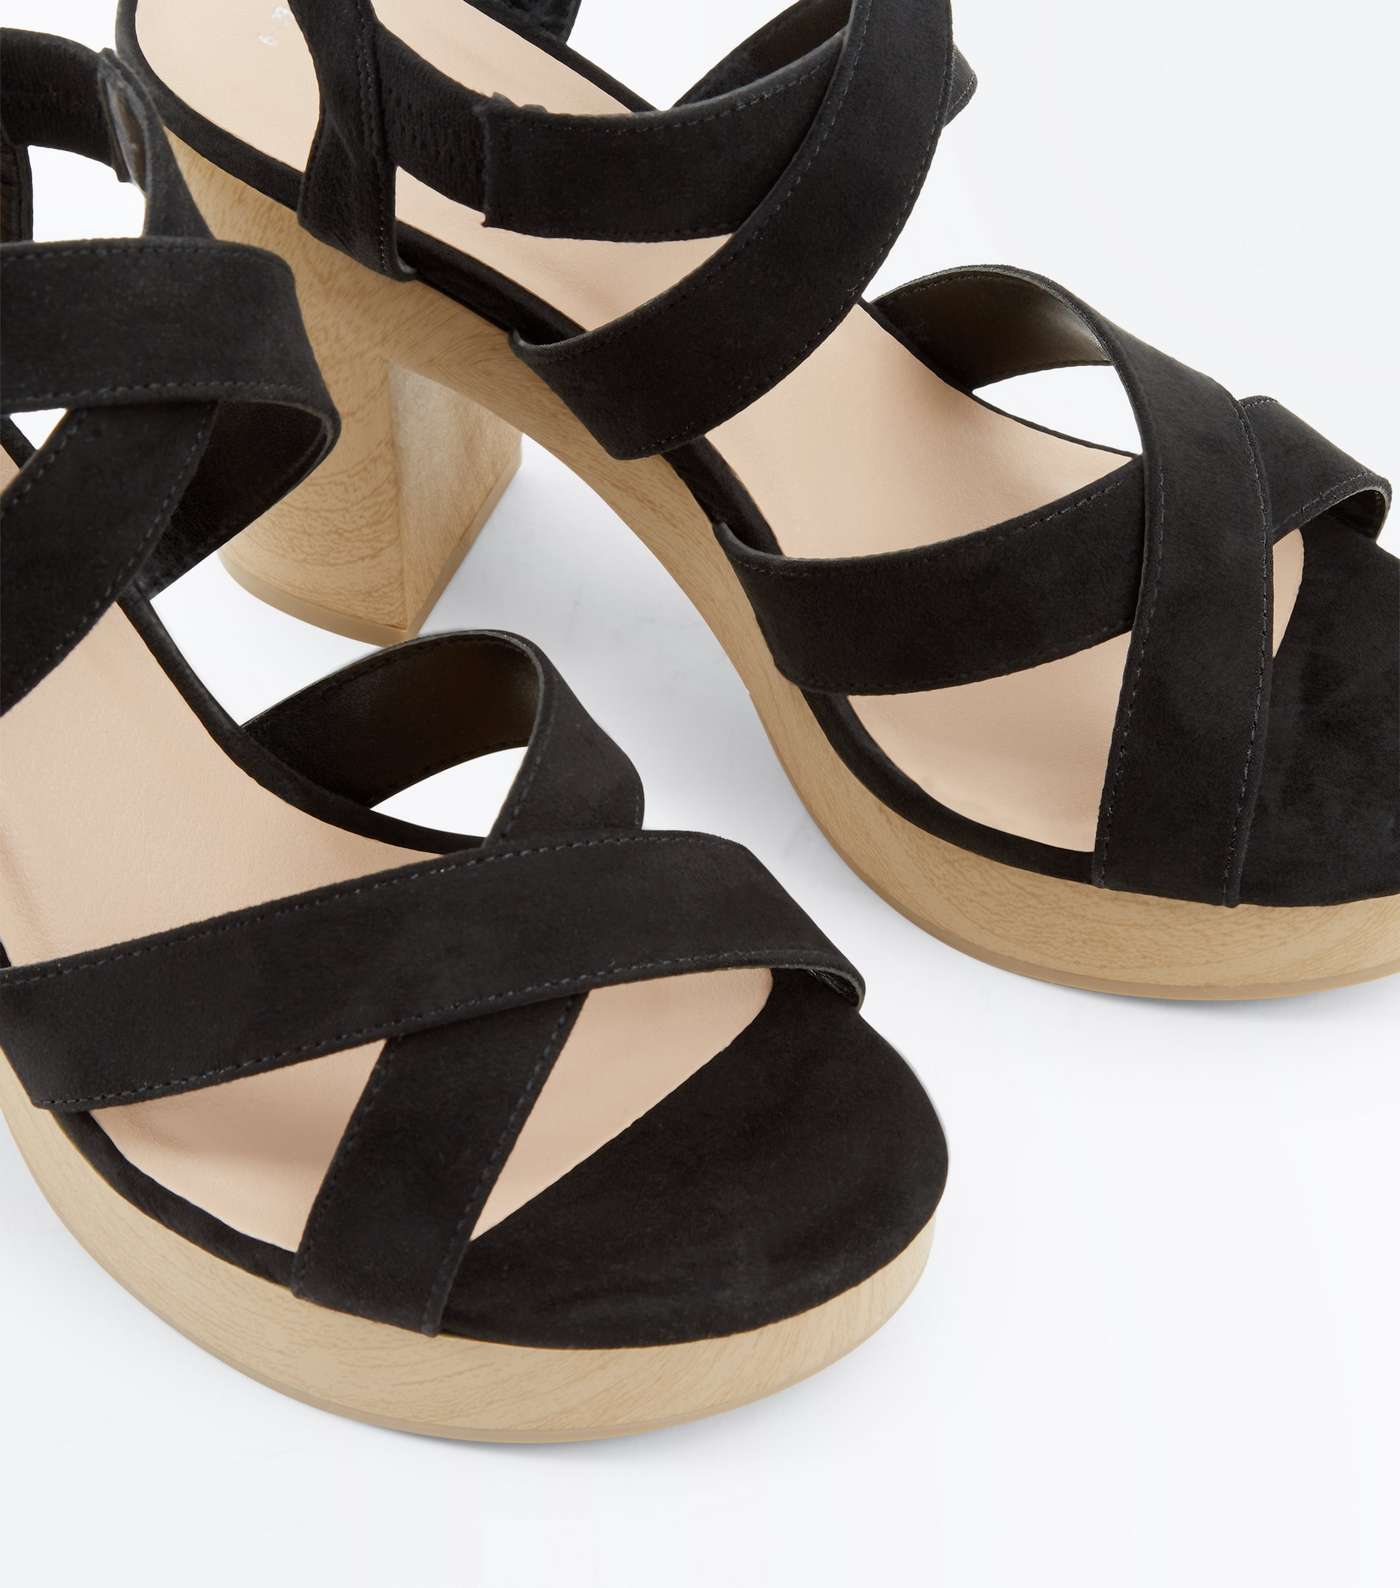 Black Suedette Strappy Wooden Sole Sandals Image 3